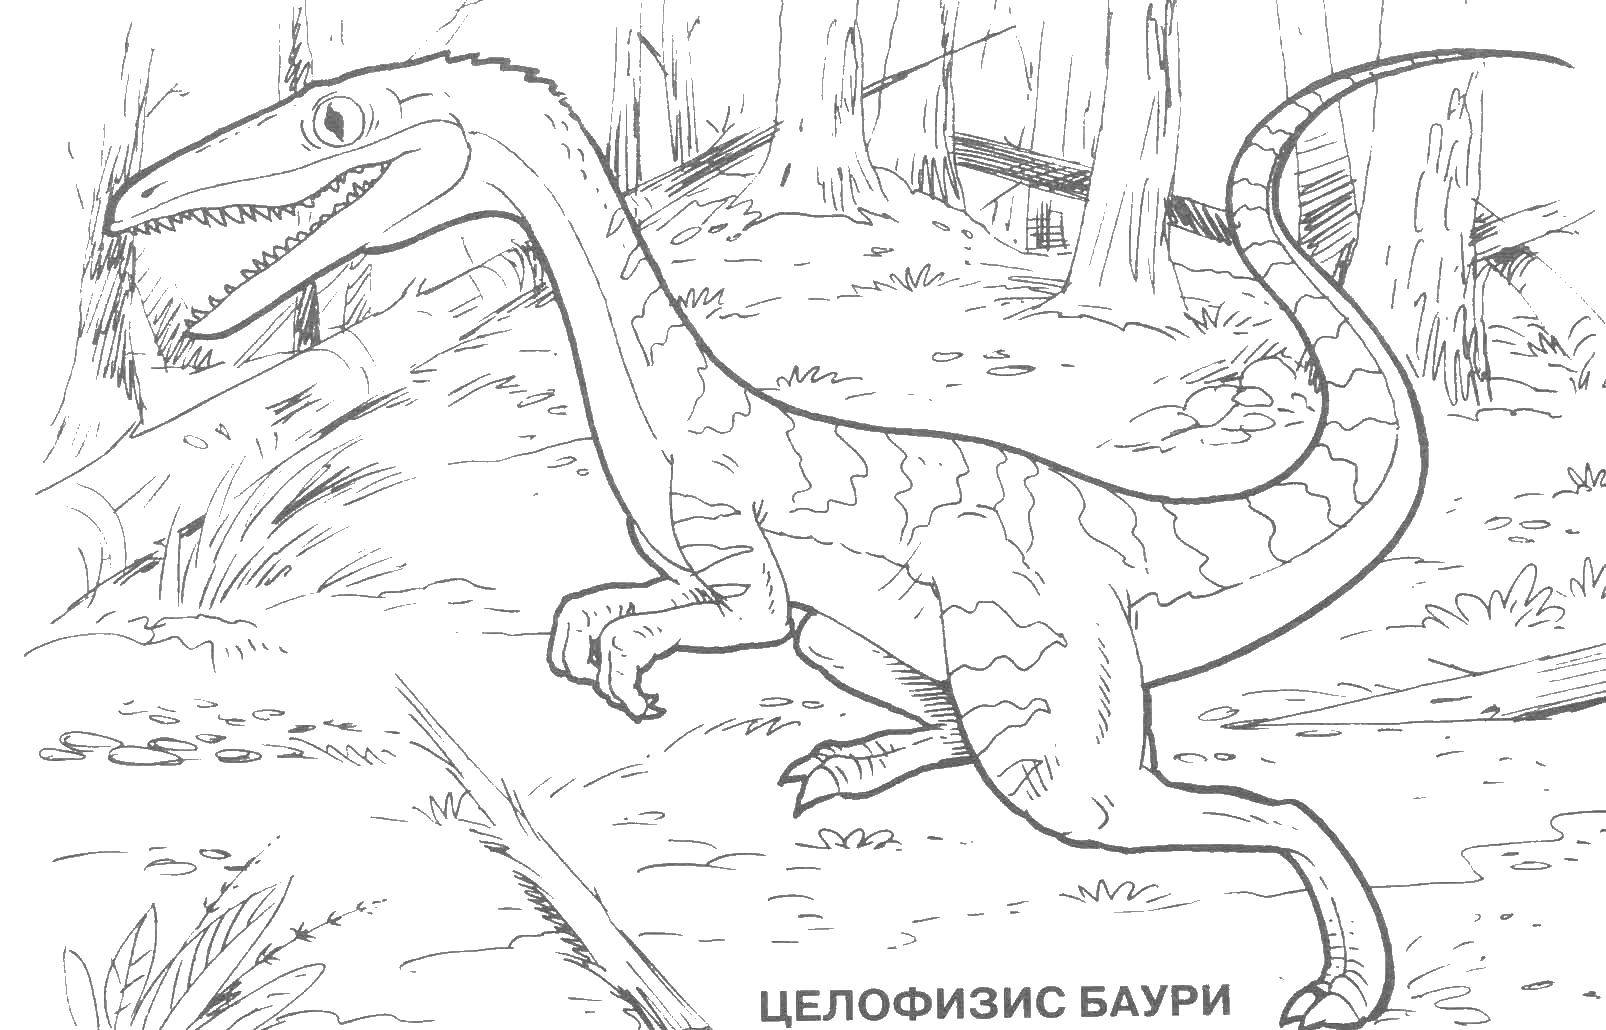 Coloring Zelovitis Bauri. Category Jurassic Park. Tags:  zelovitis Bauri, dinosaur.